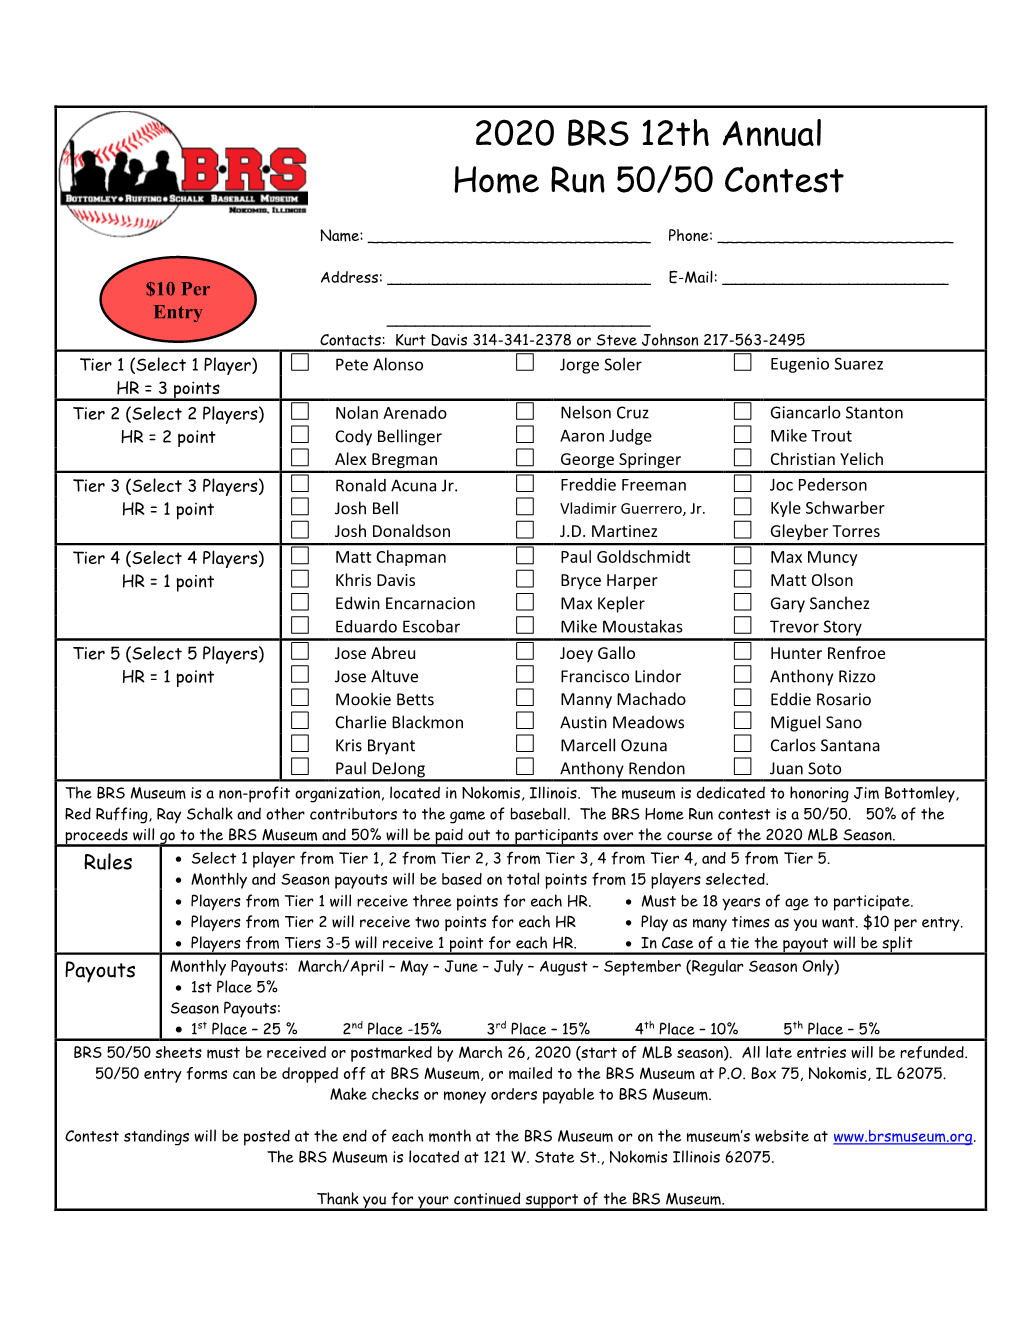 2020 BRS 12Th Annual Home Run 50/50 Contest